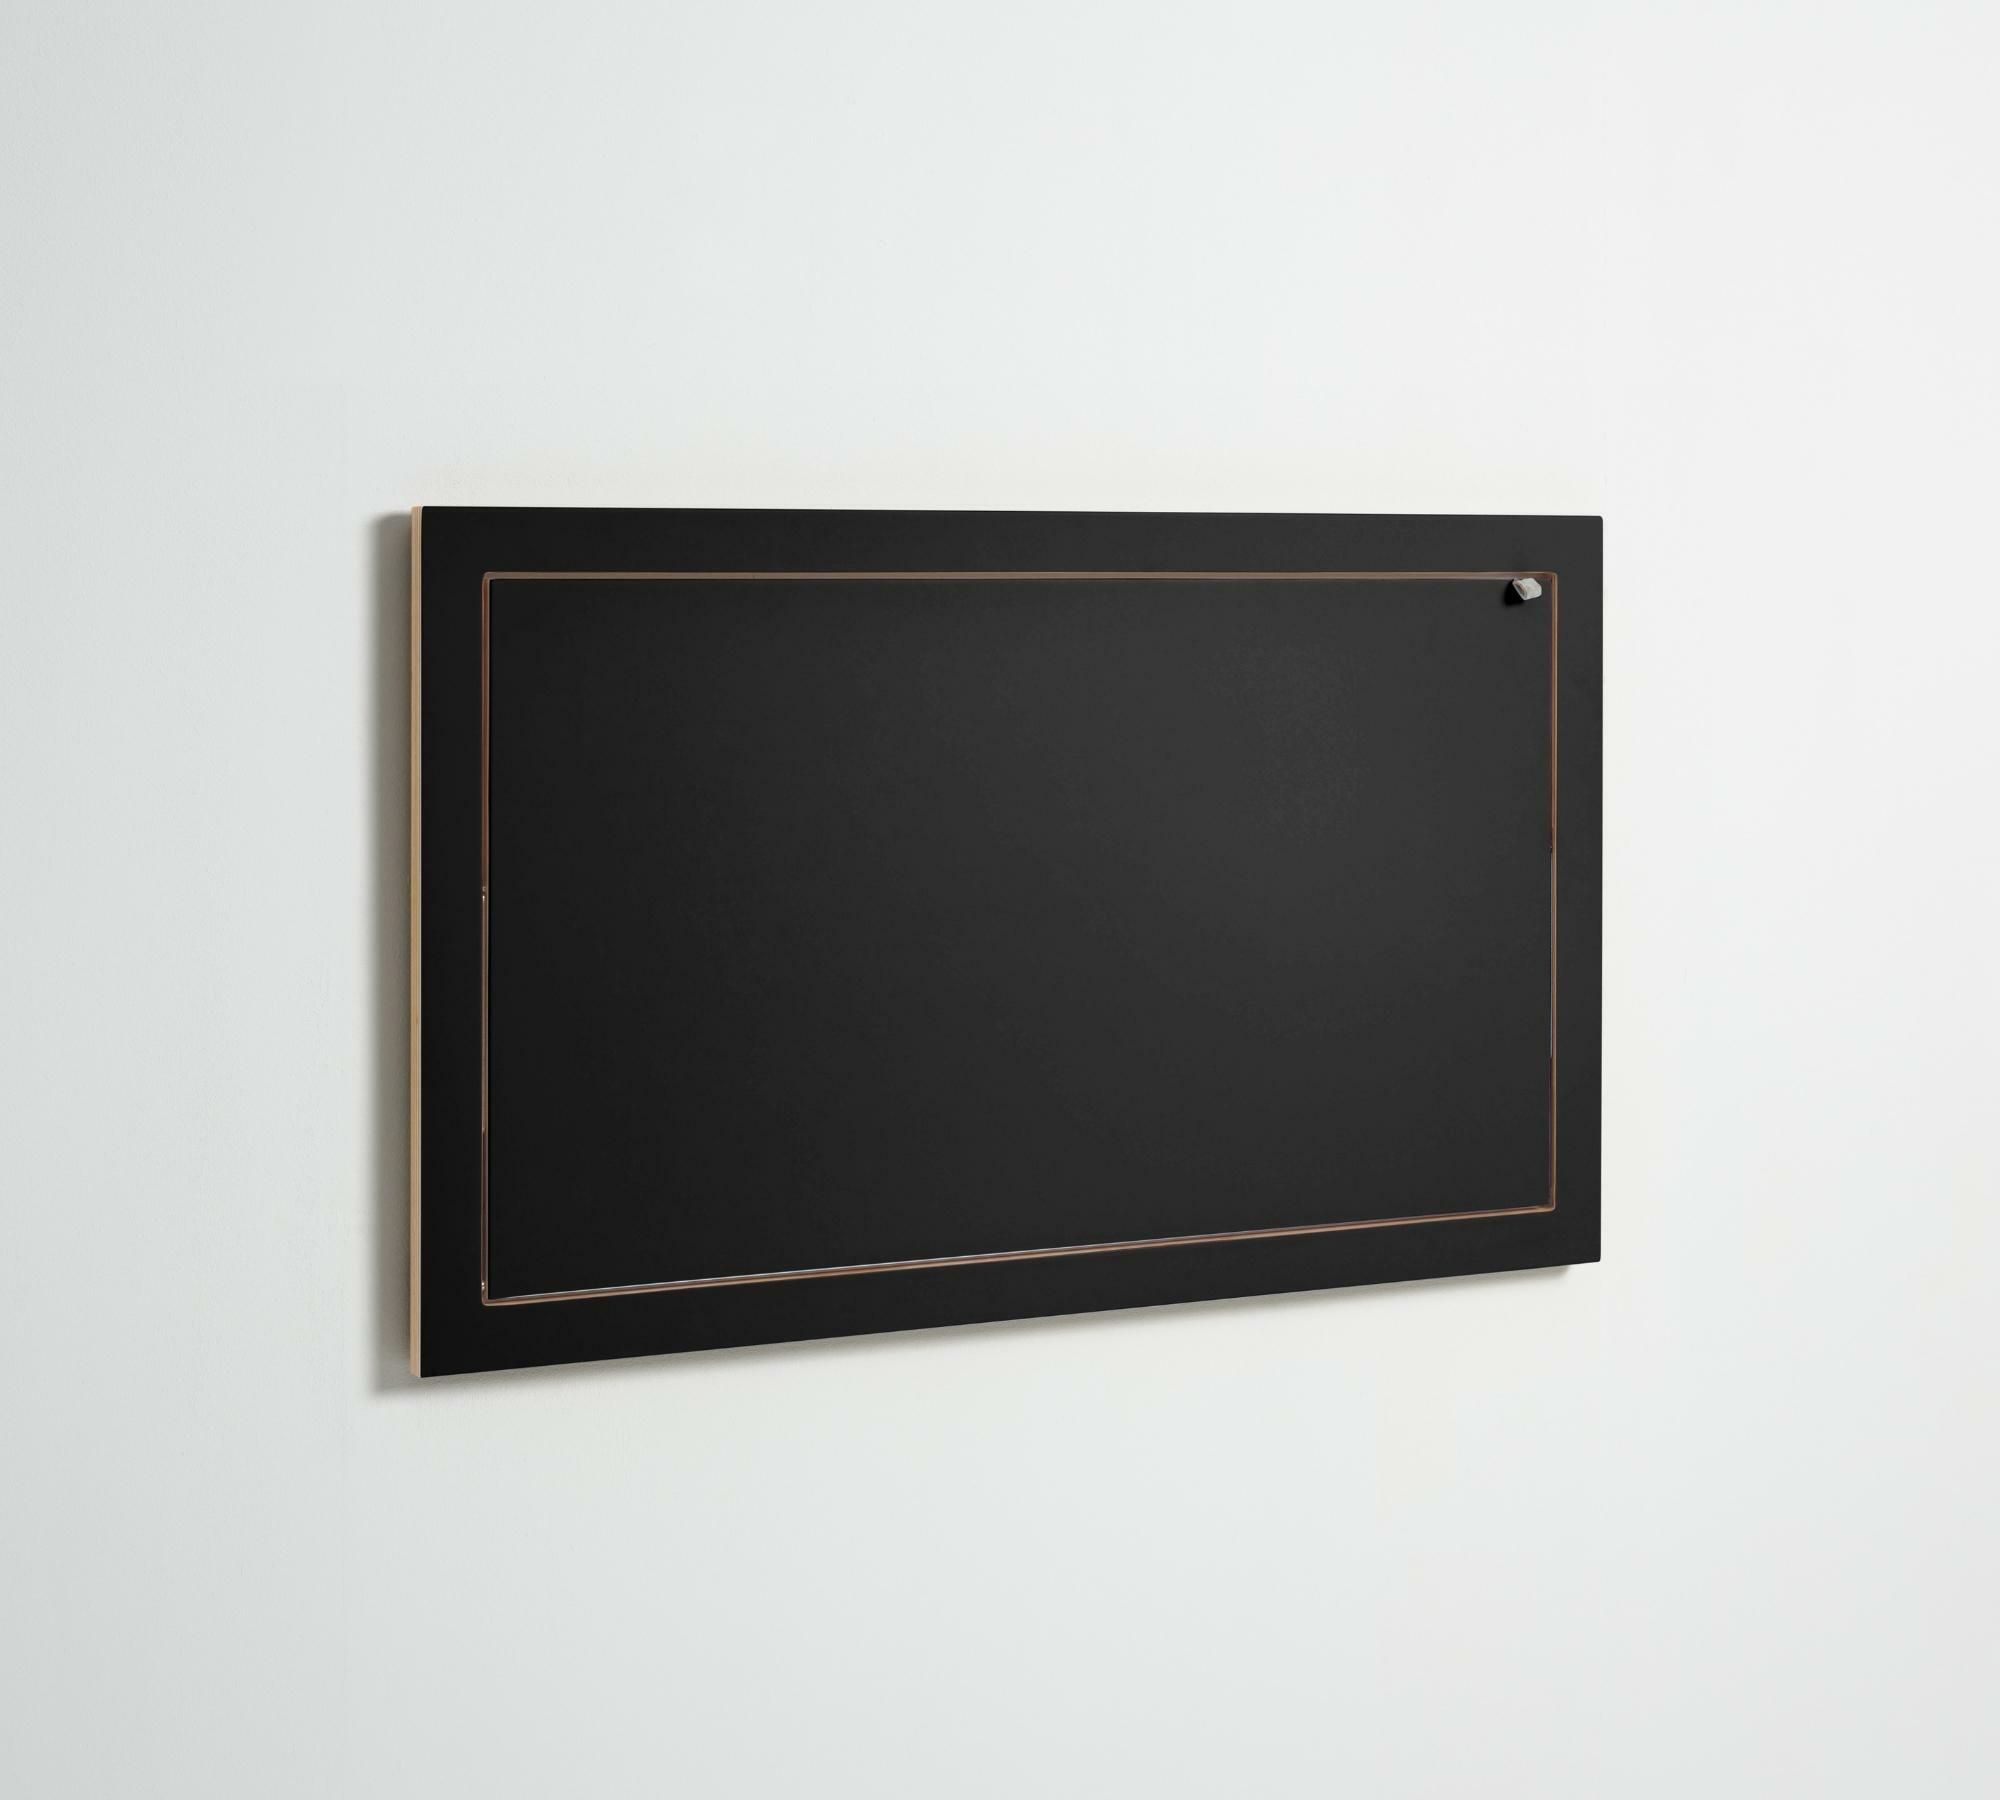 Fläpps Sekretär Holz Schwarz 100 x 60 cm 2